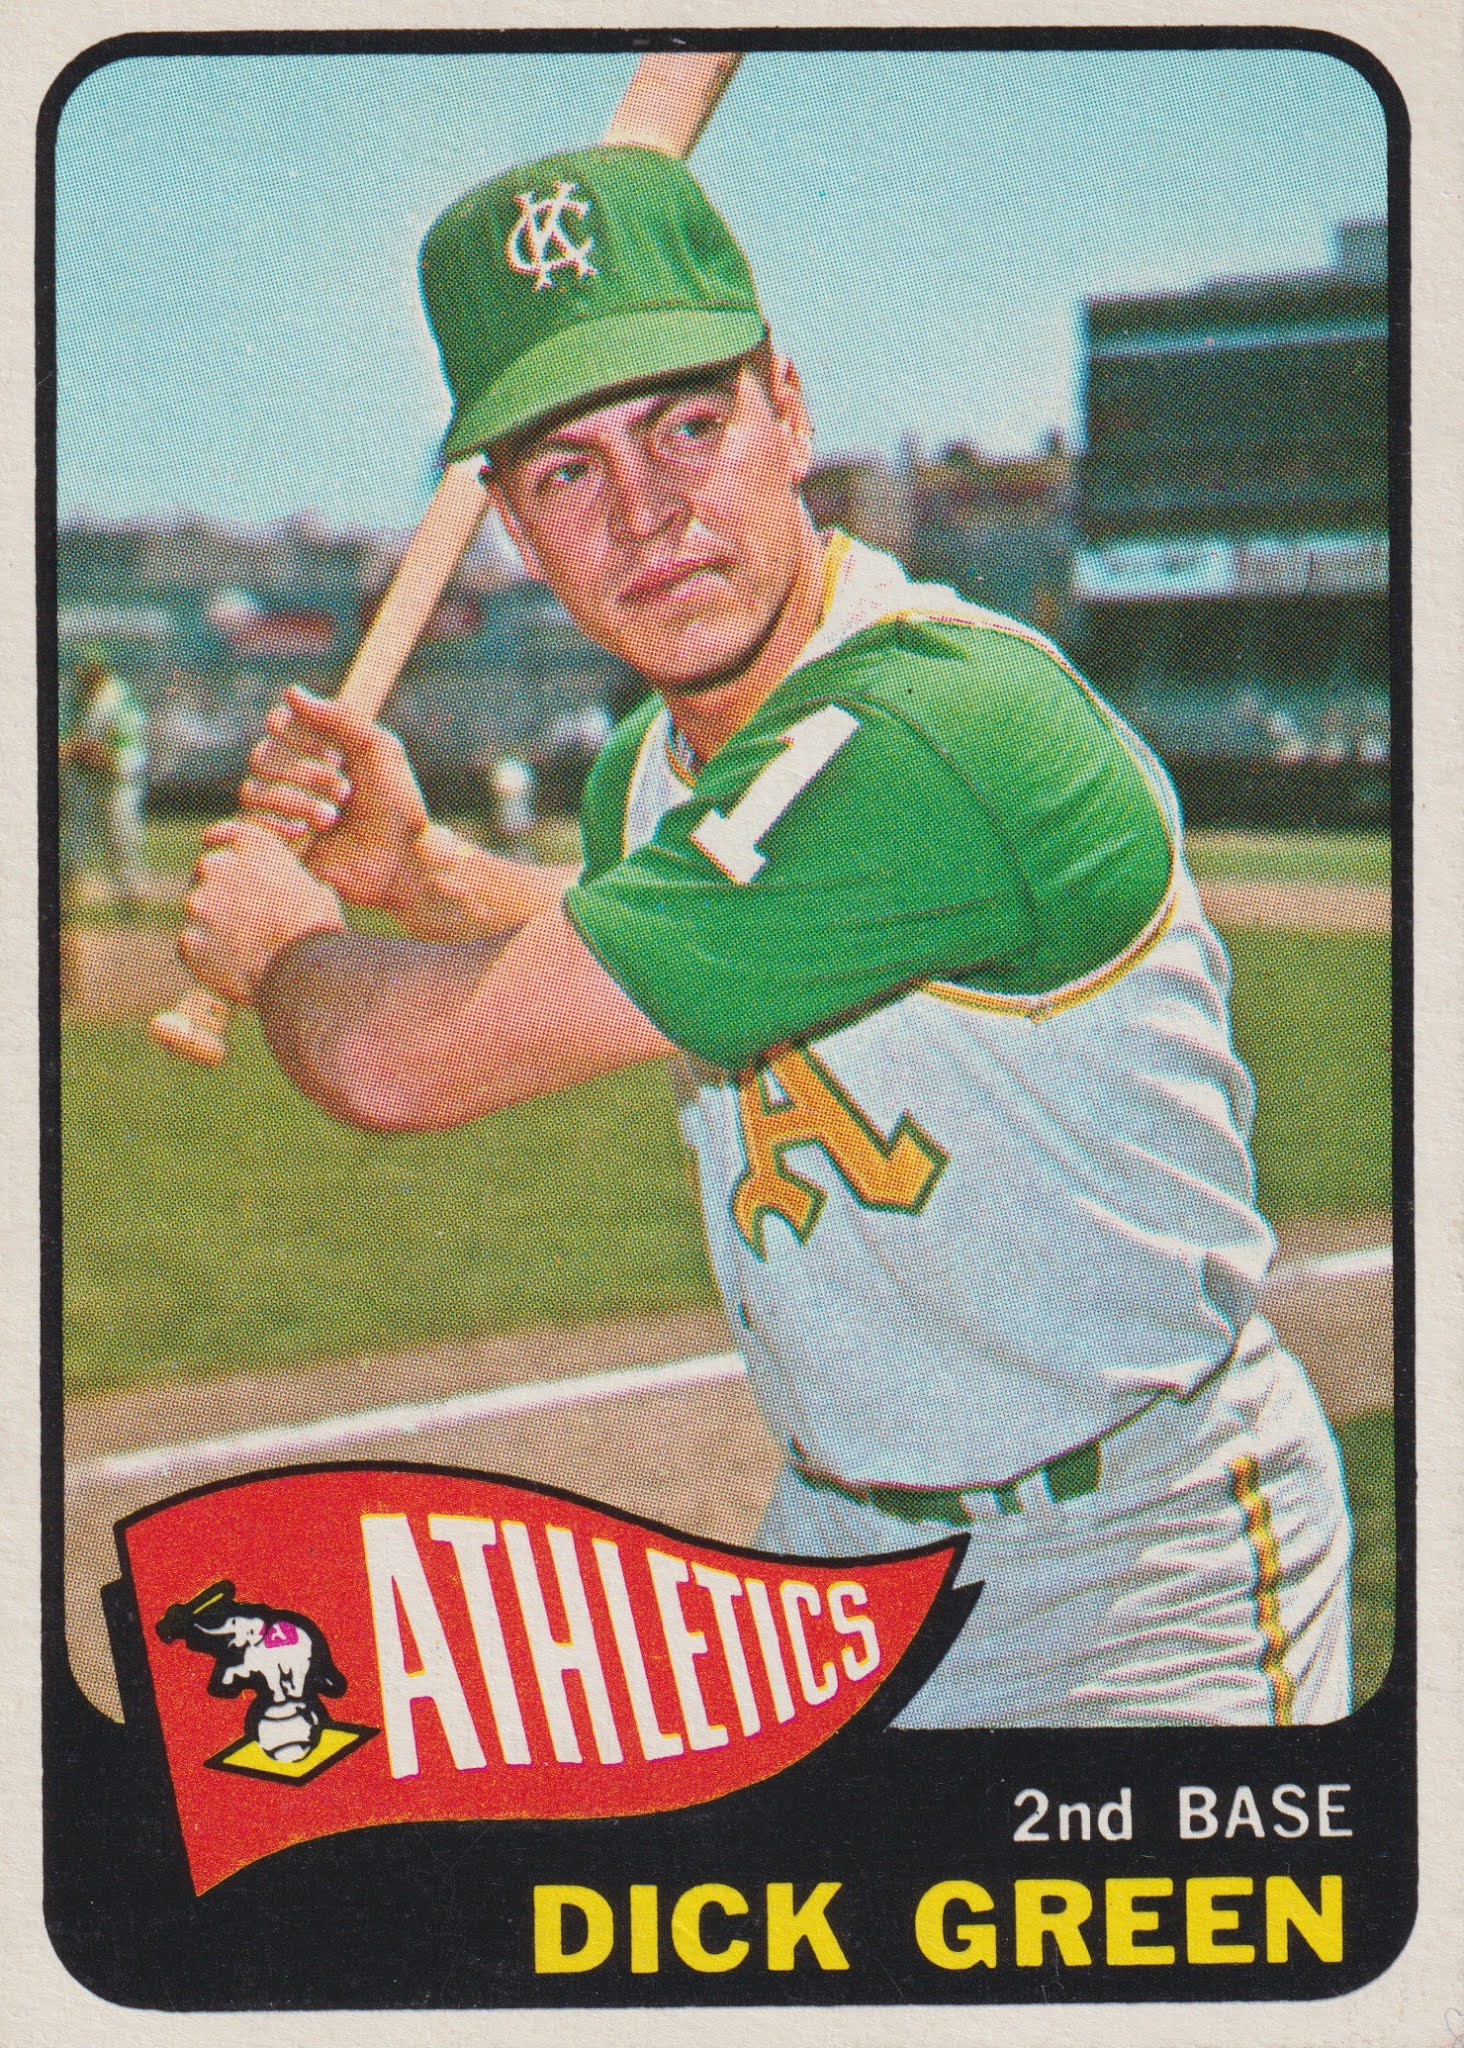 Dick green baseball player